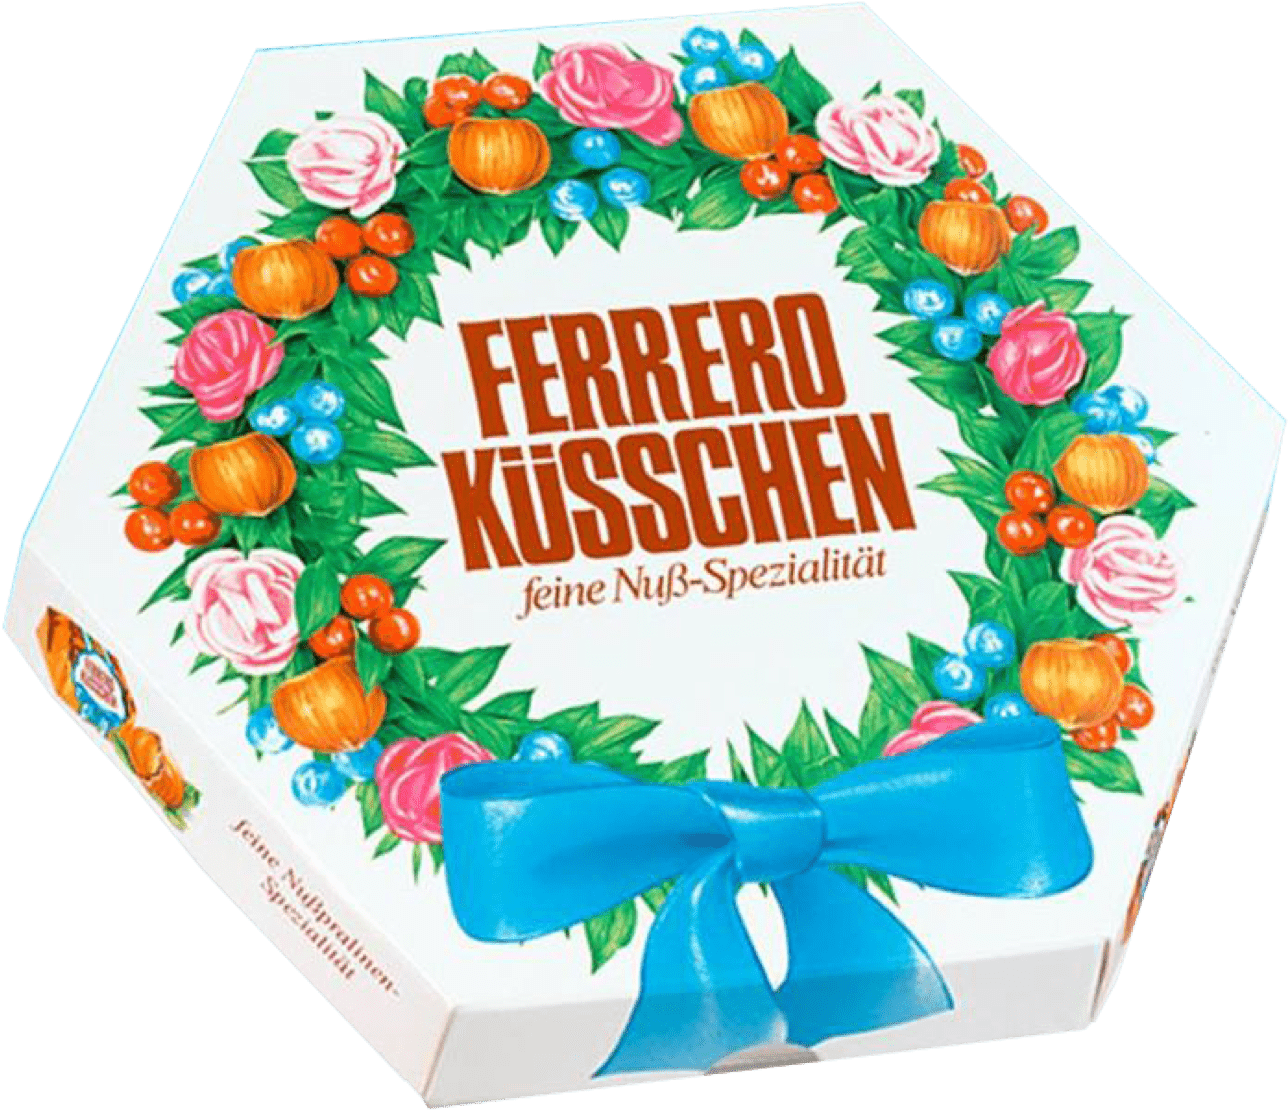 Ferrero Küsschen Double Choc, Like_the_Grand_Canyon